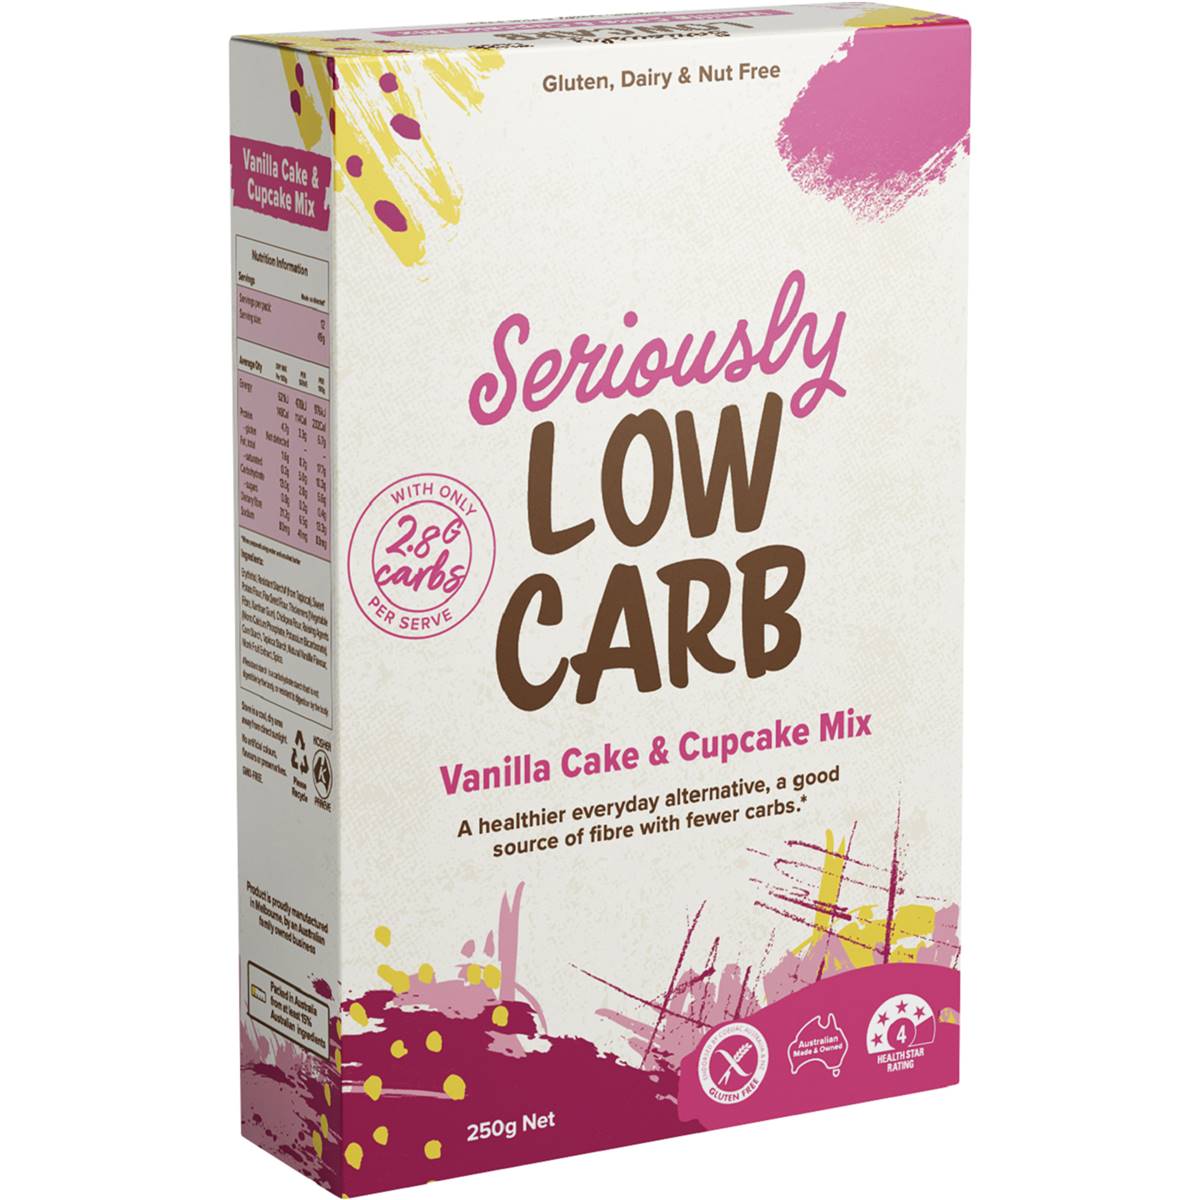 Calories in Seriously Low Carb Vanilla Cake & Cupcake Mix